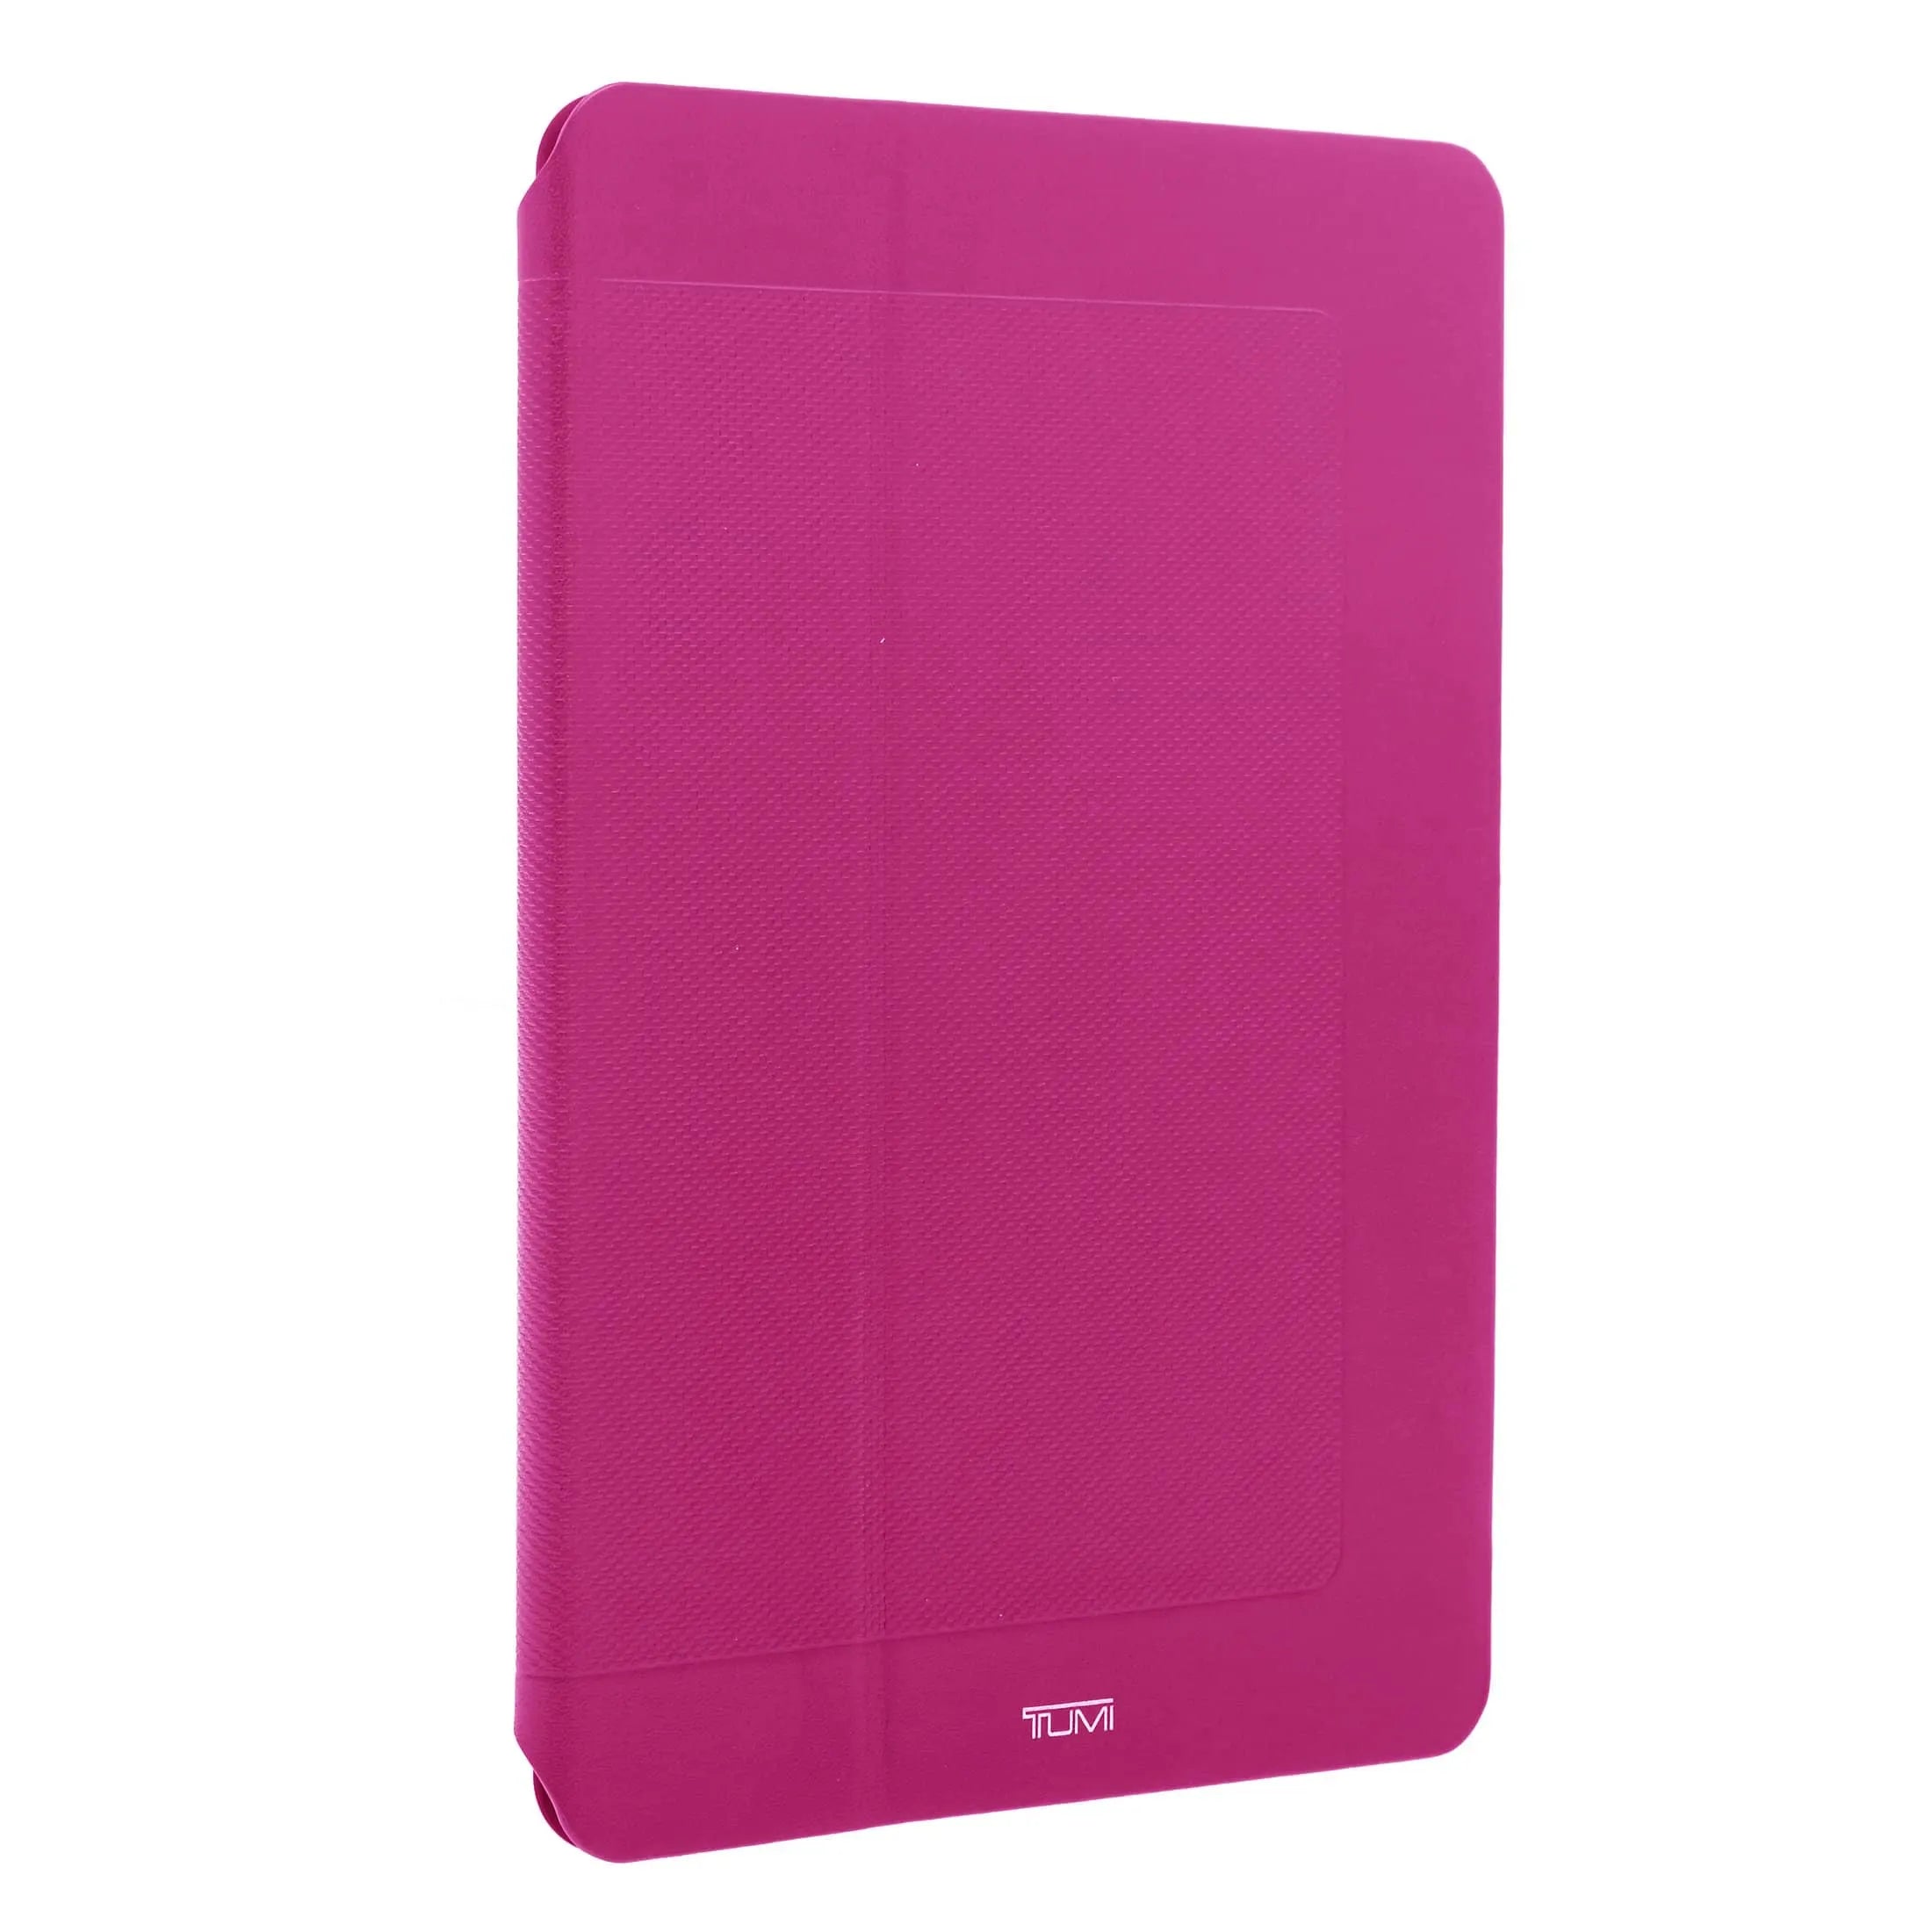 Tumi Accessories leather protective case for iPad Air 24 cm - fuchsia